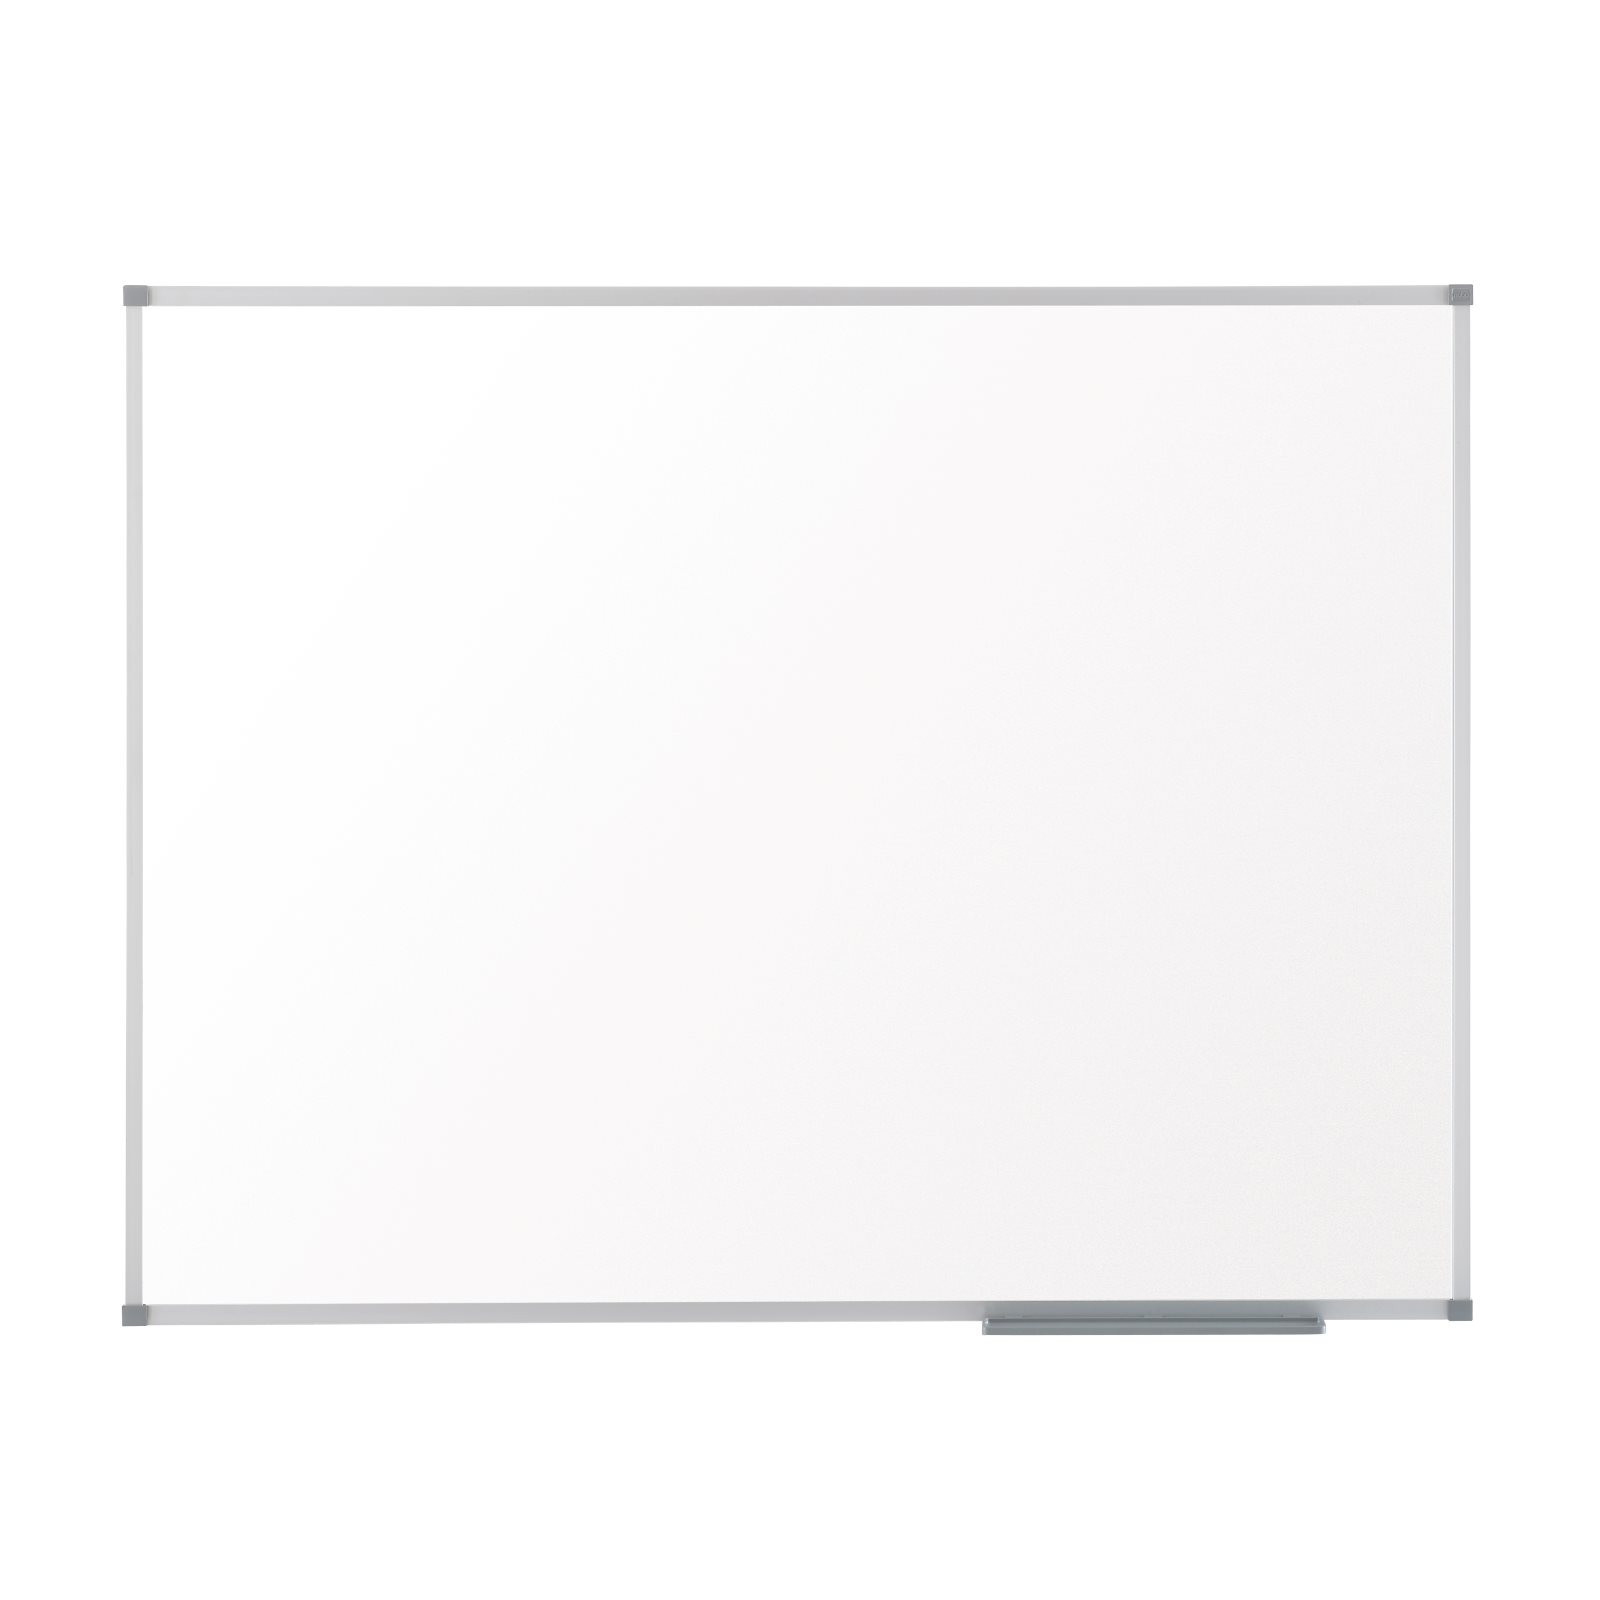 Photos - Dry Erase Board / Flipchart Nobo Basic Steel Magnetic Whiteboard 2400x1200mm with Basic Trim 1905214 